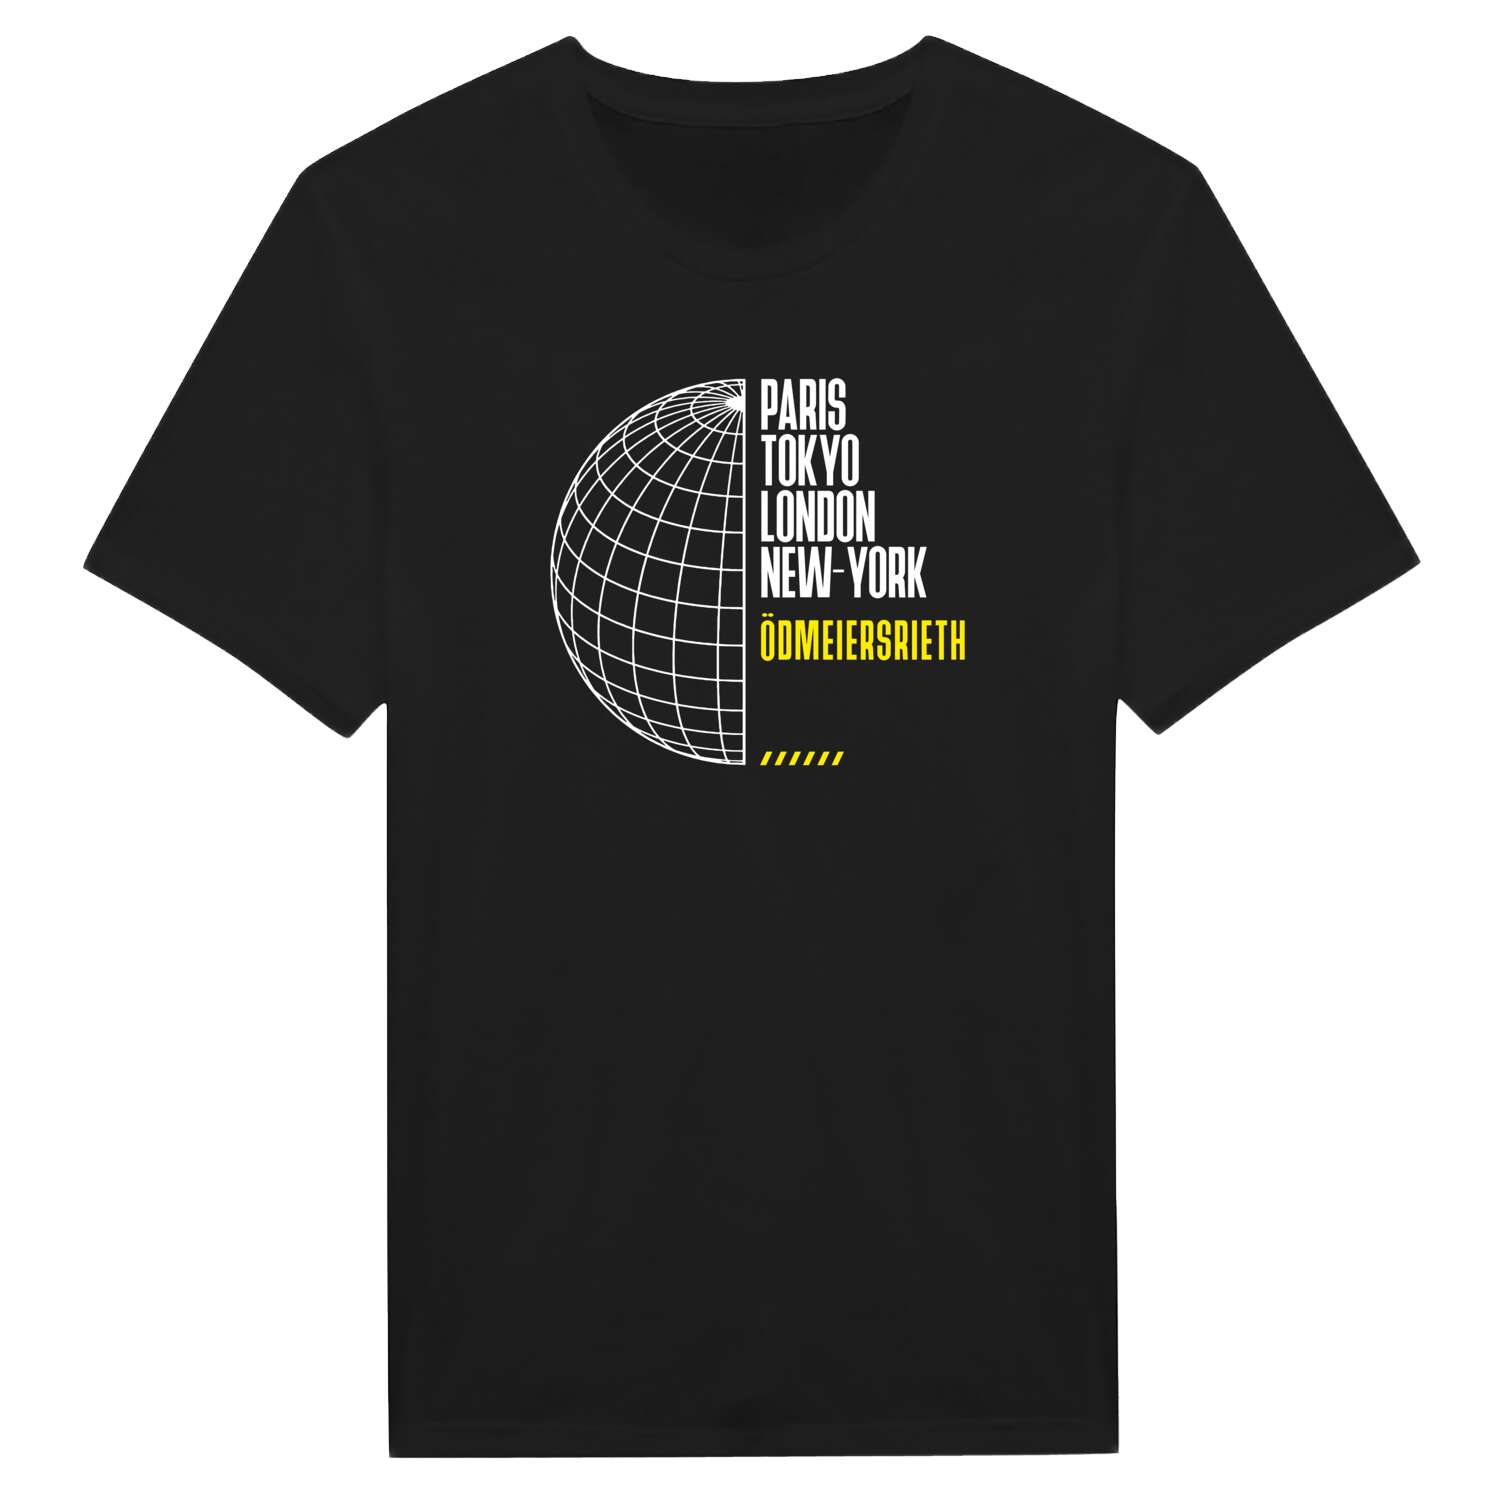 Ödmeiersrieth T-Shirt »Paris Tokyo London«